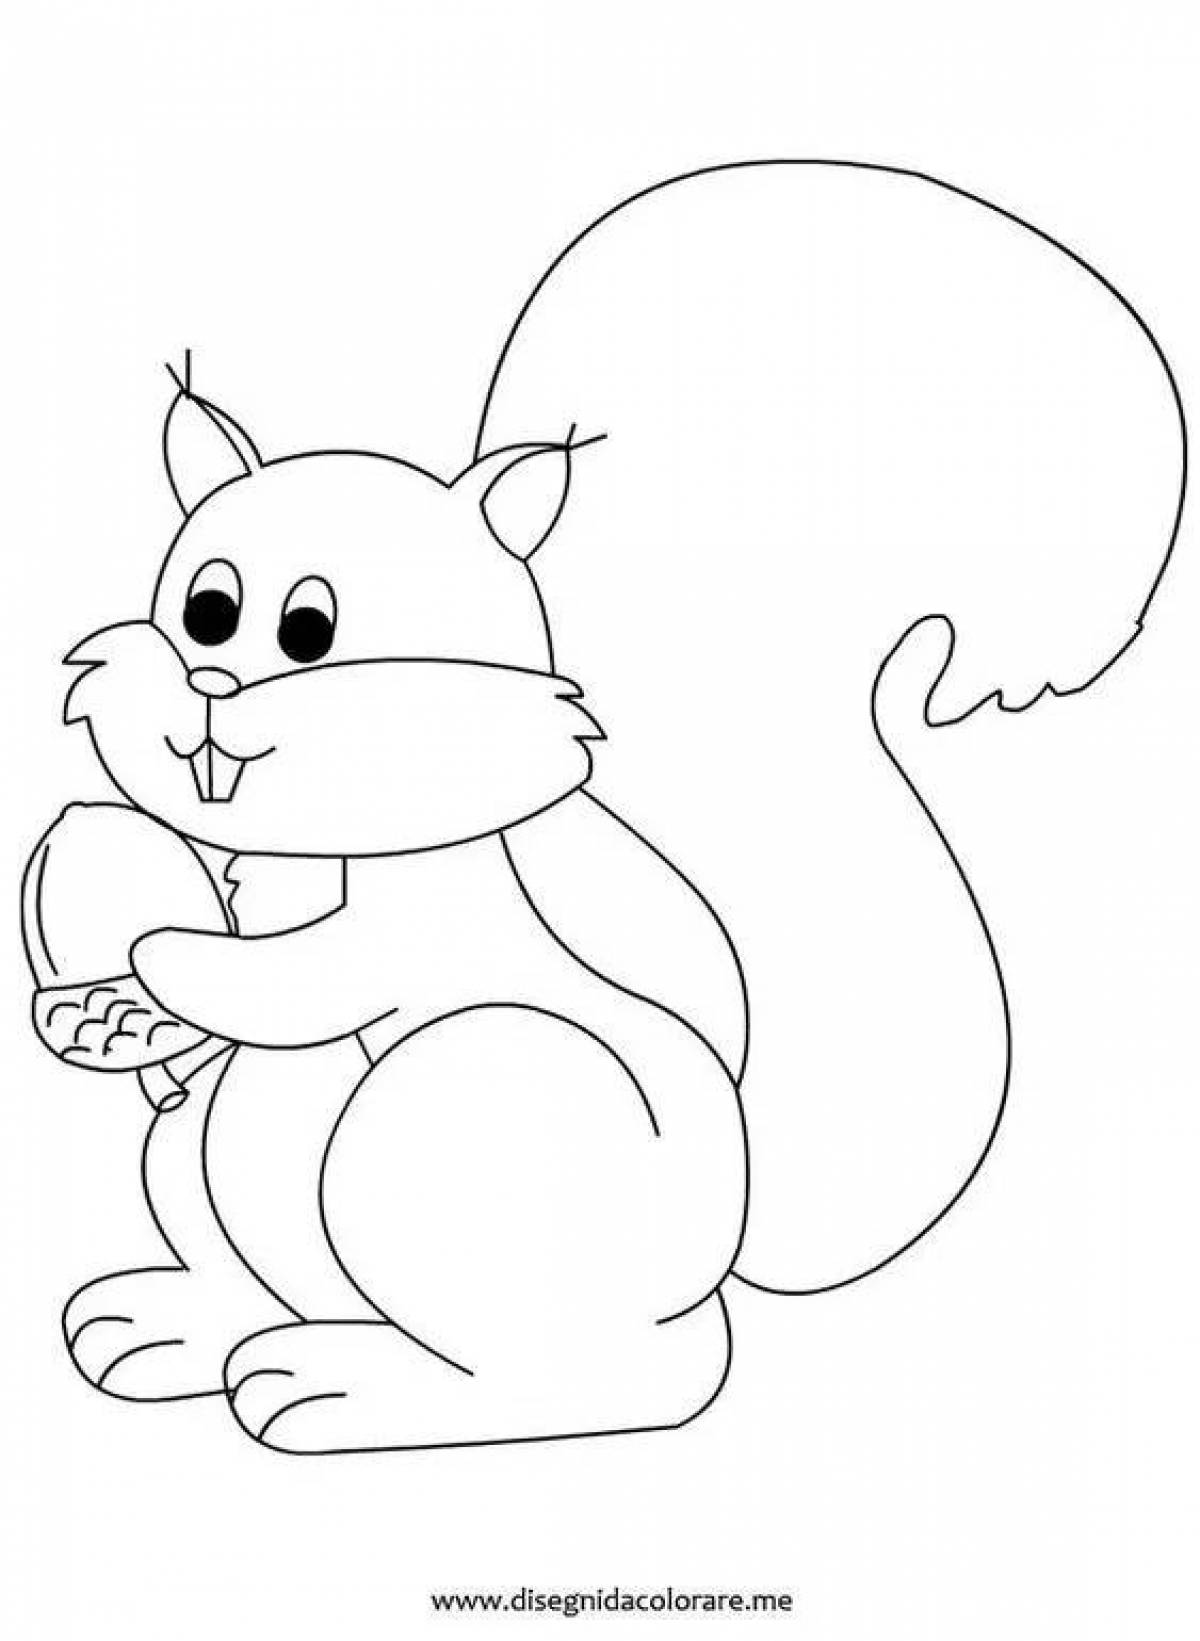 Fantastic squirrel coloring book for kids